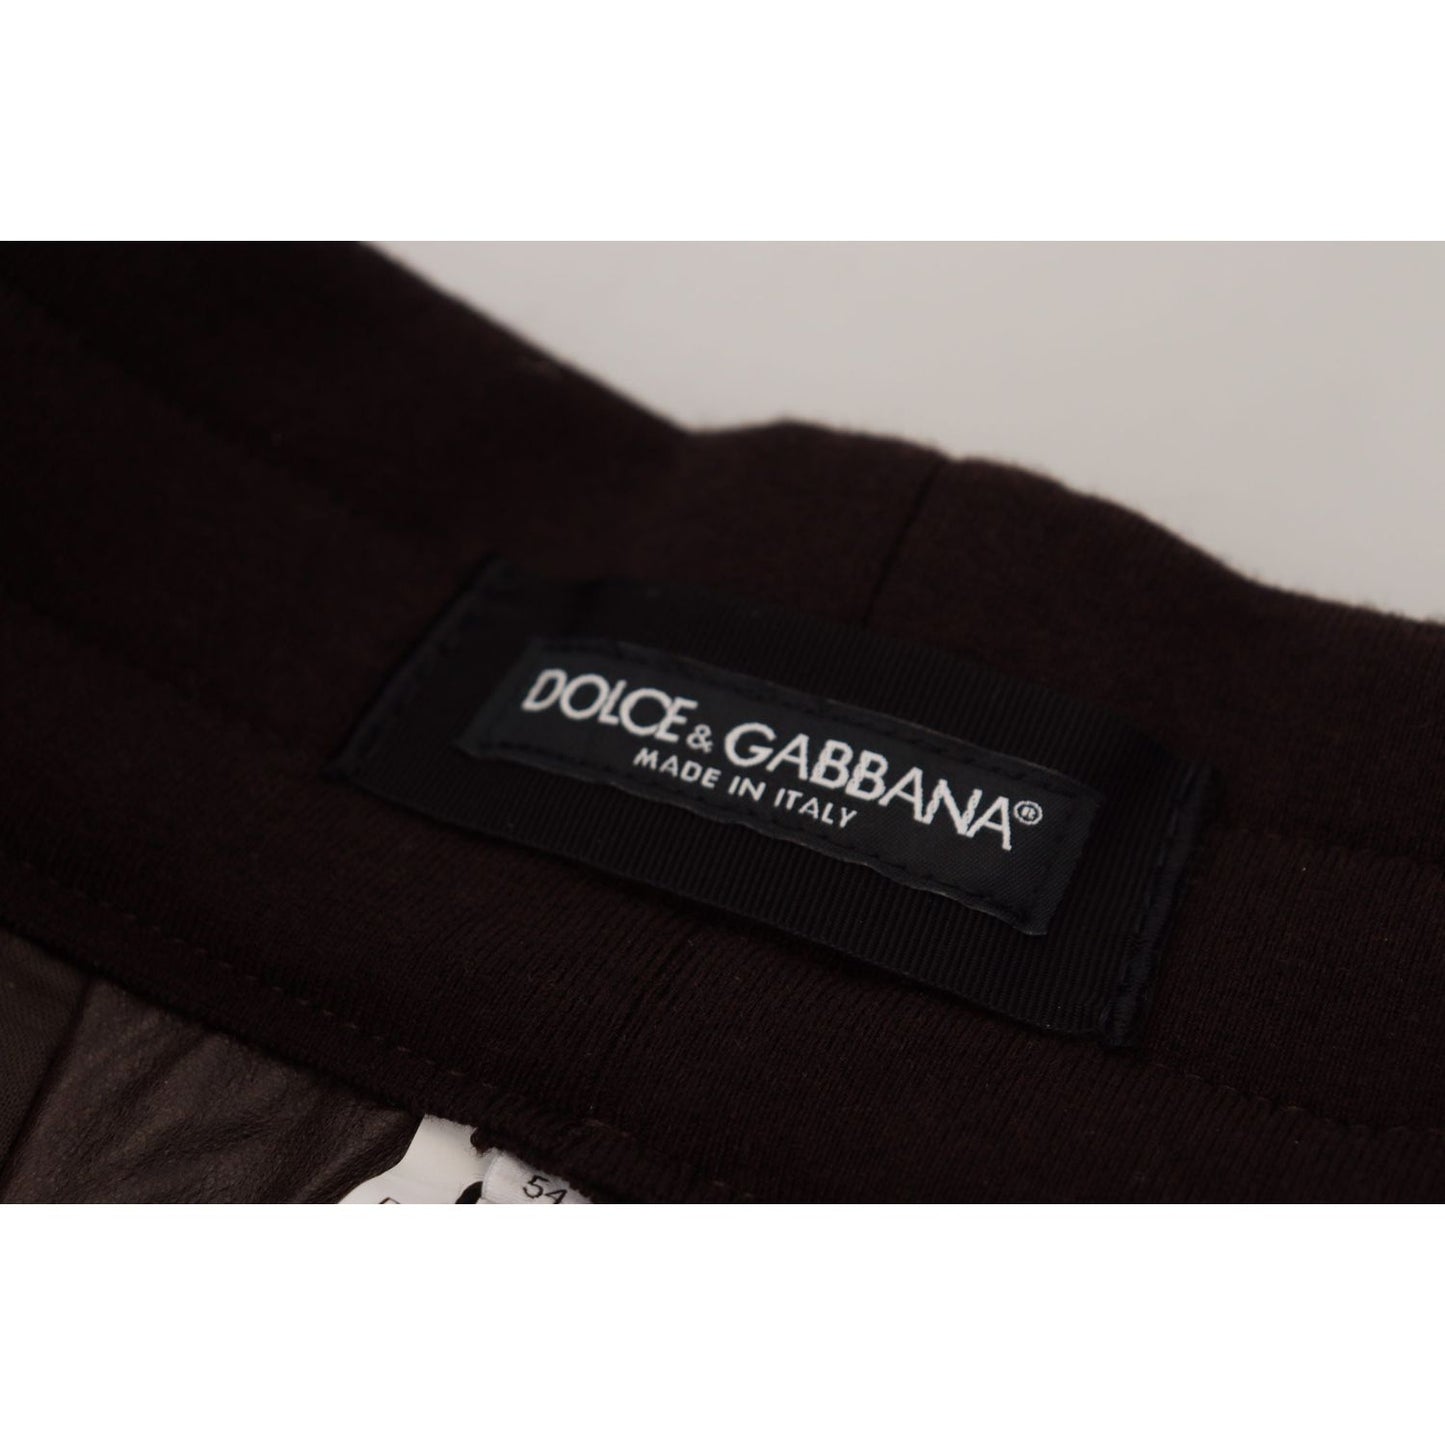 Dolce & GabbanaStunning Authentic Jogger Pants in BrownMcRichard Designer Brands£999.00